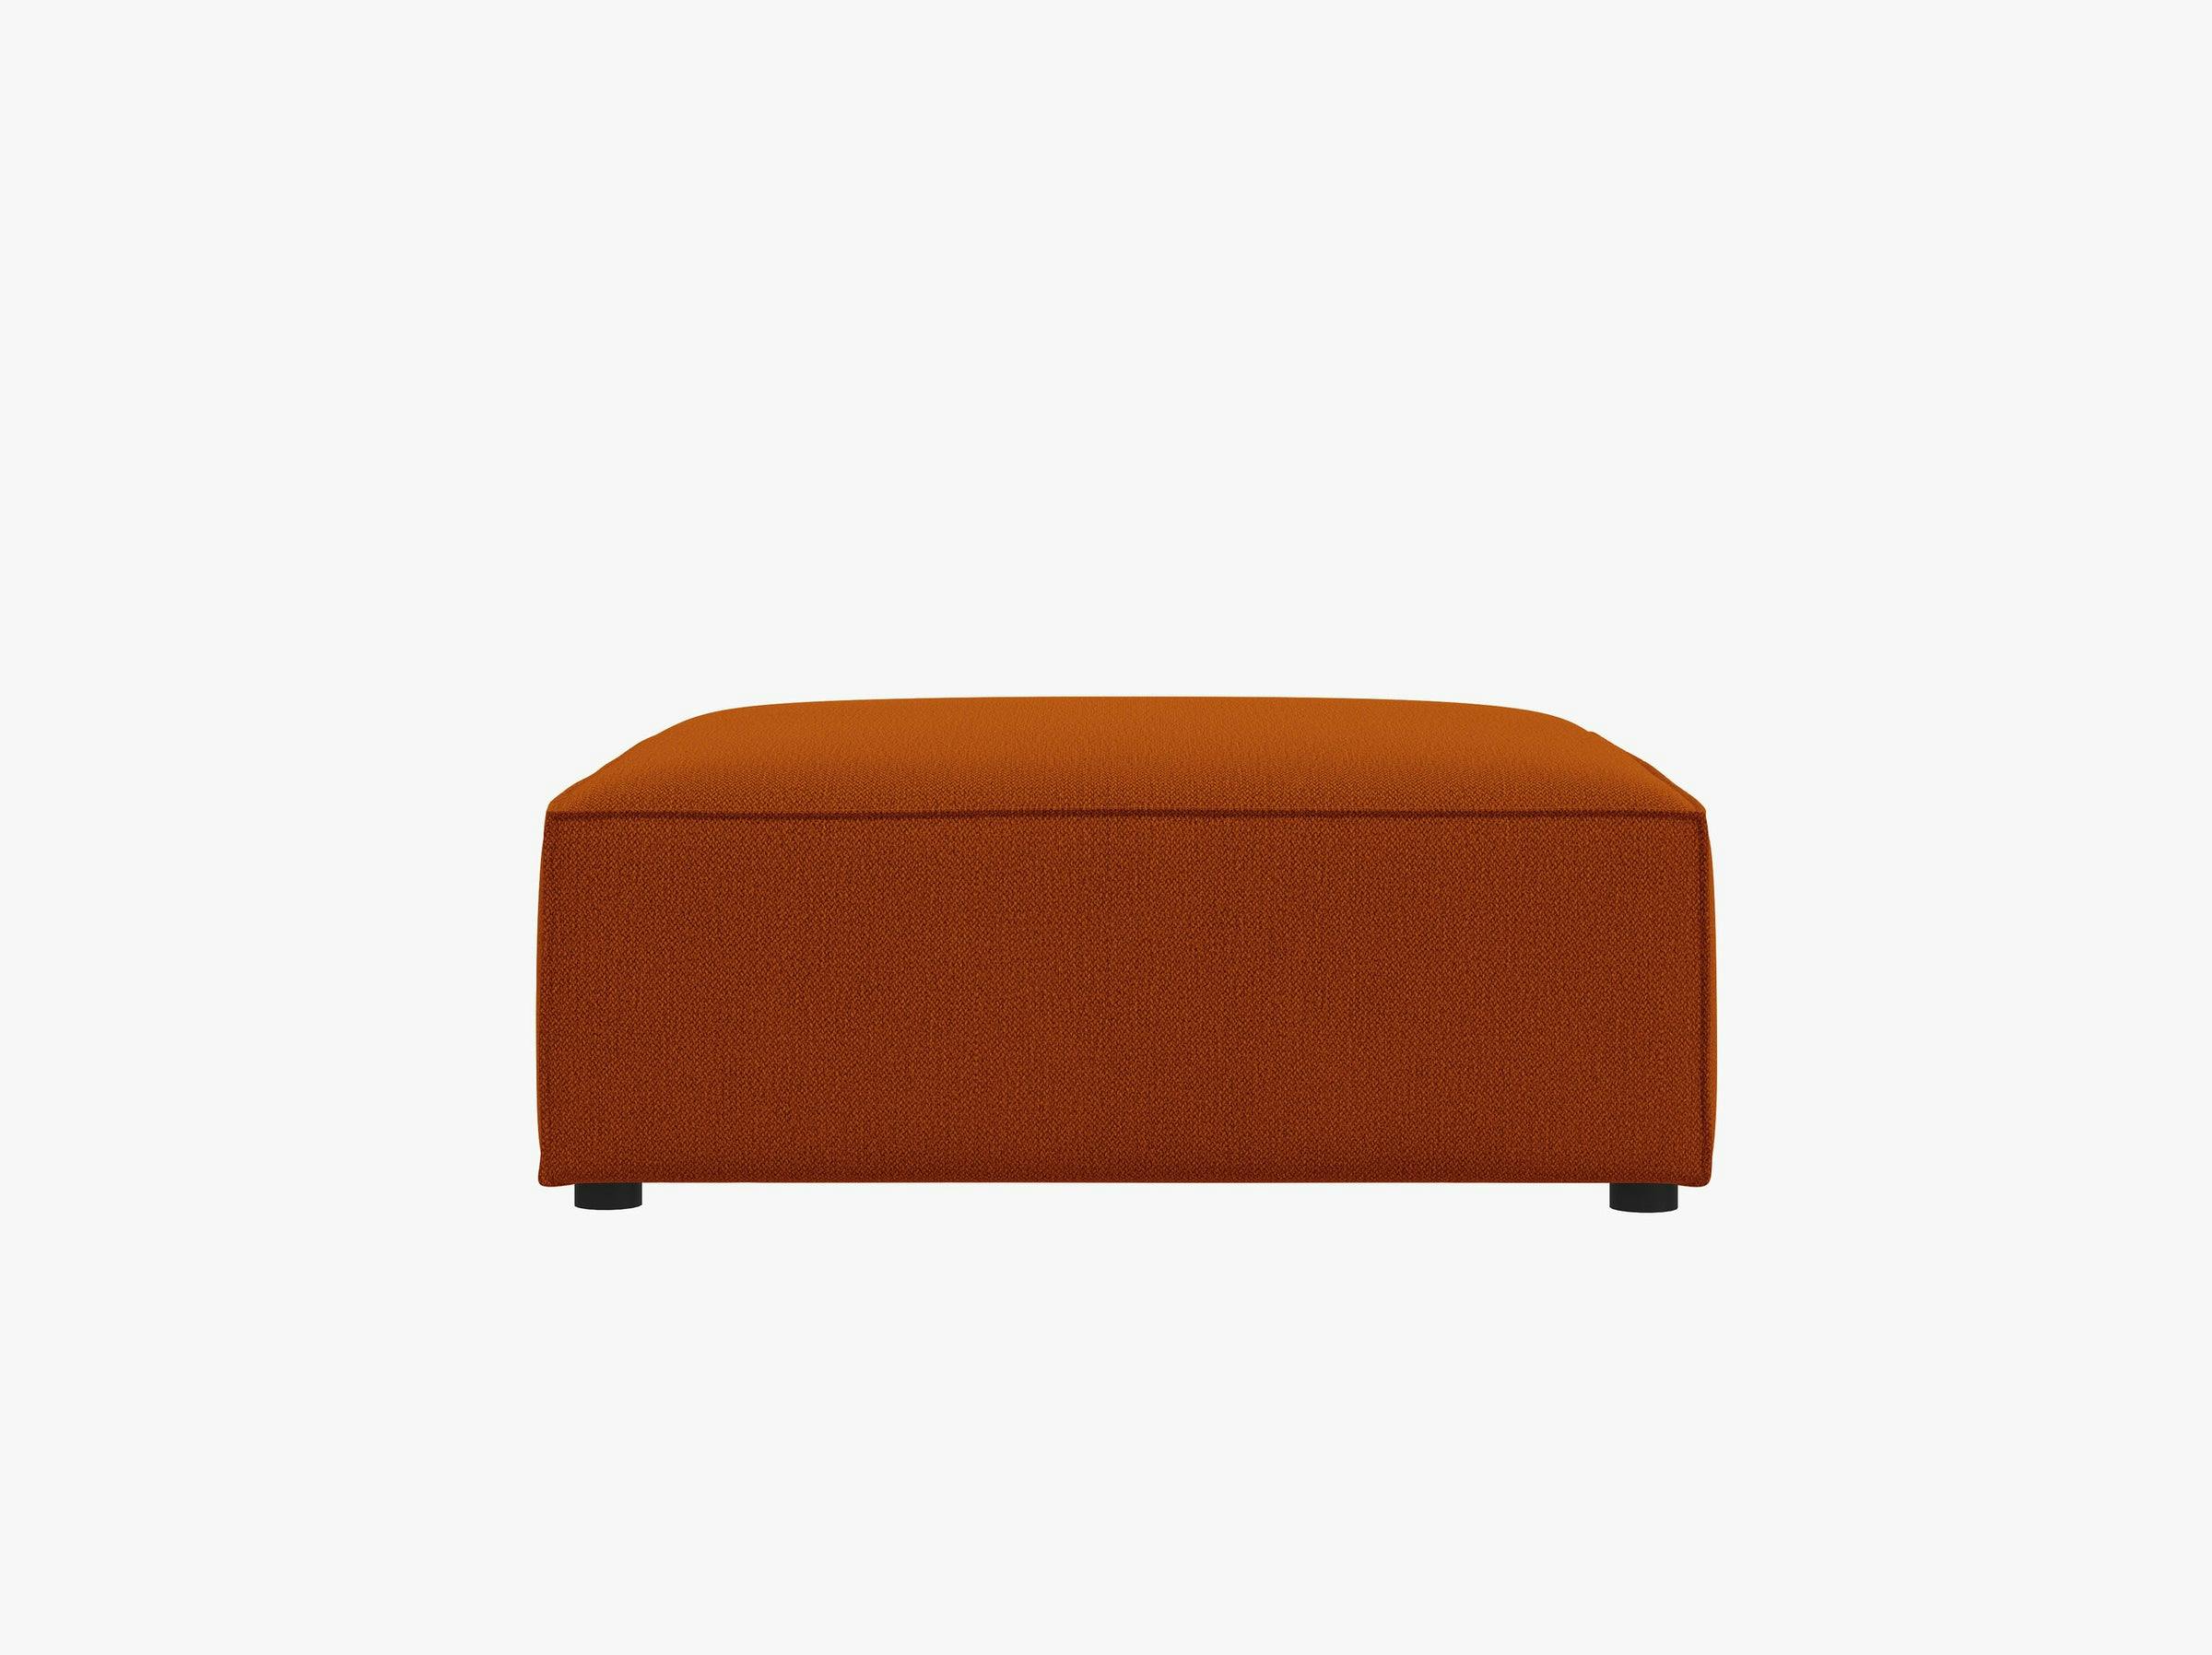 Jodie sofas structured fabric terracotta